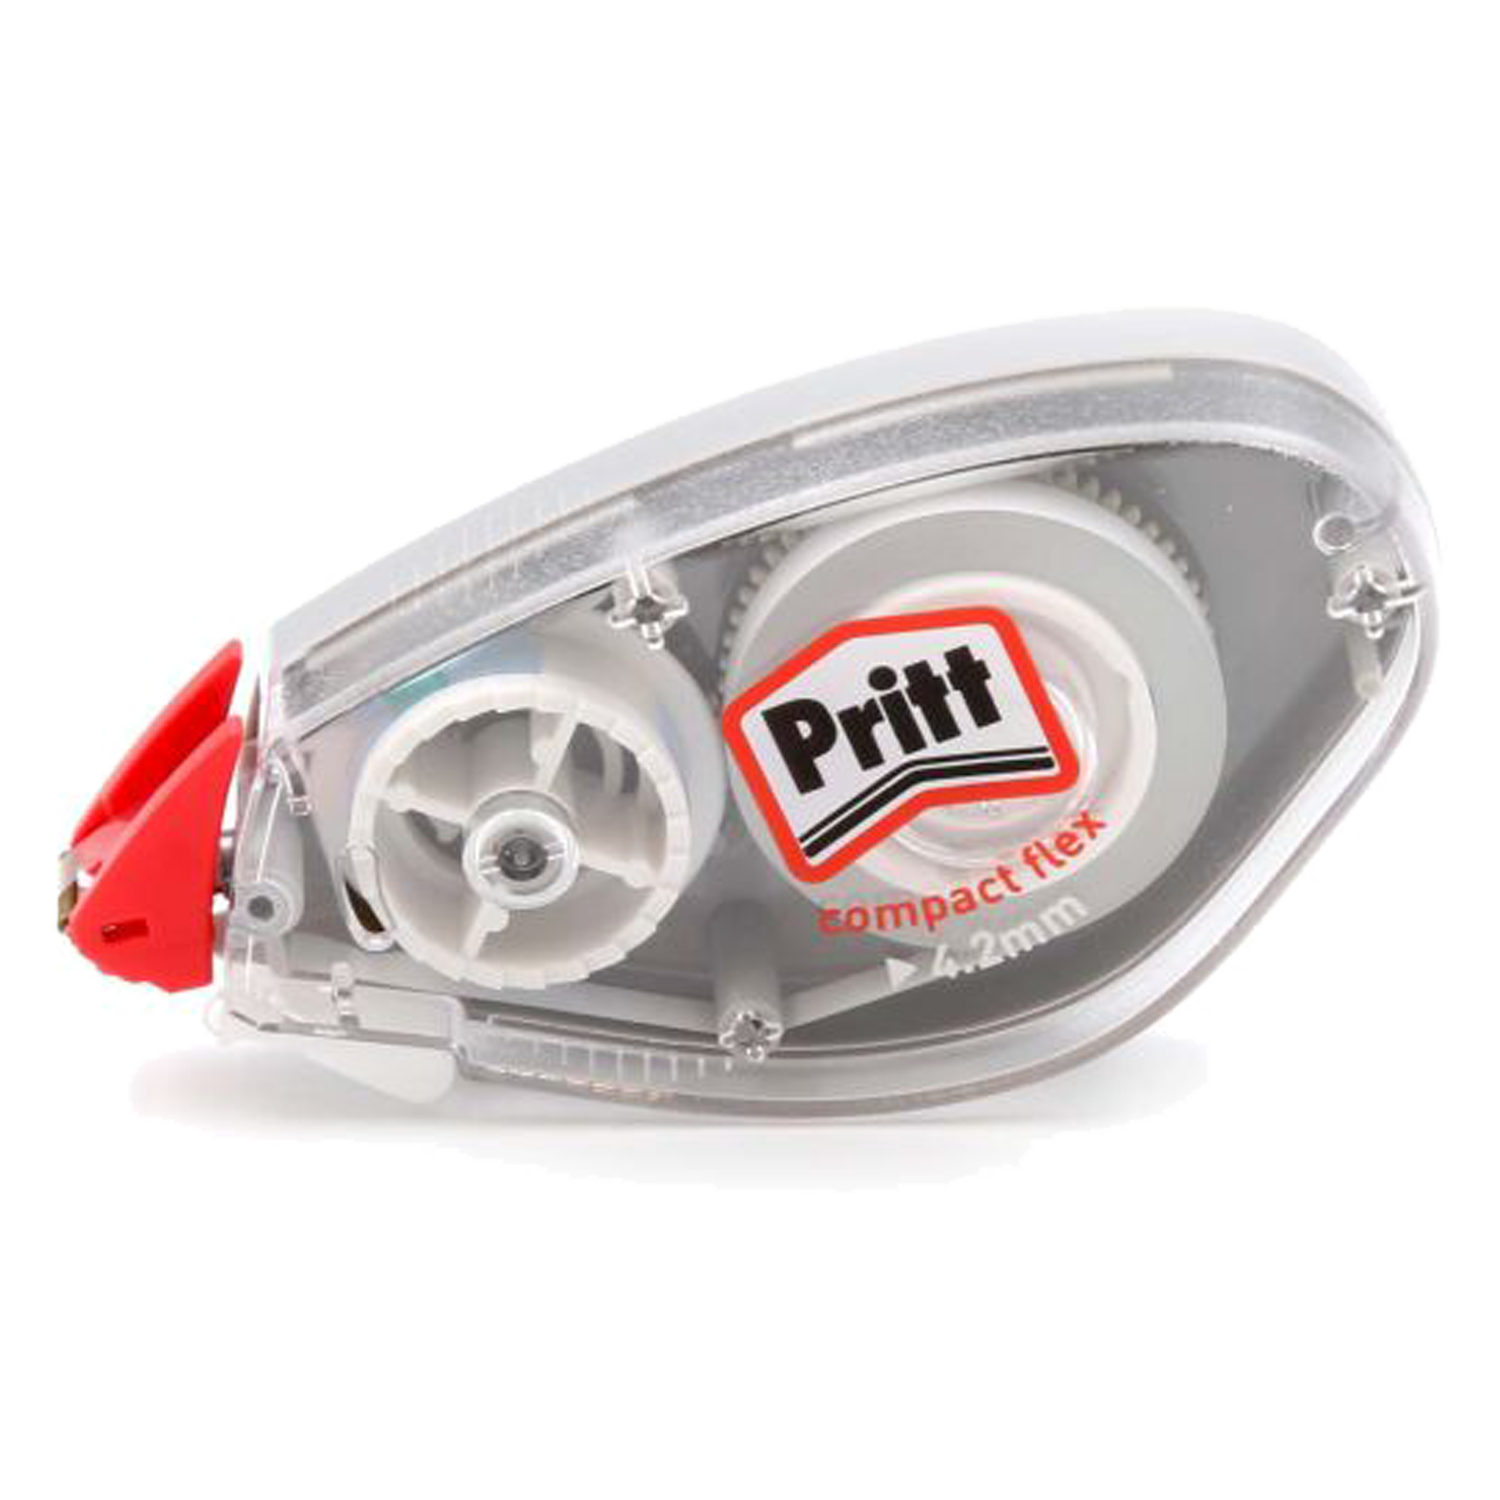 PRITT Correttore Roller Compact Flex 4.2mm